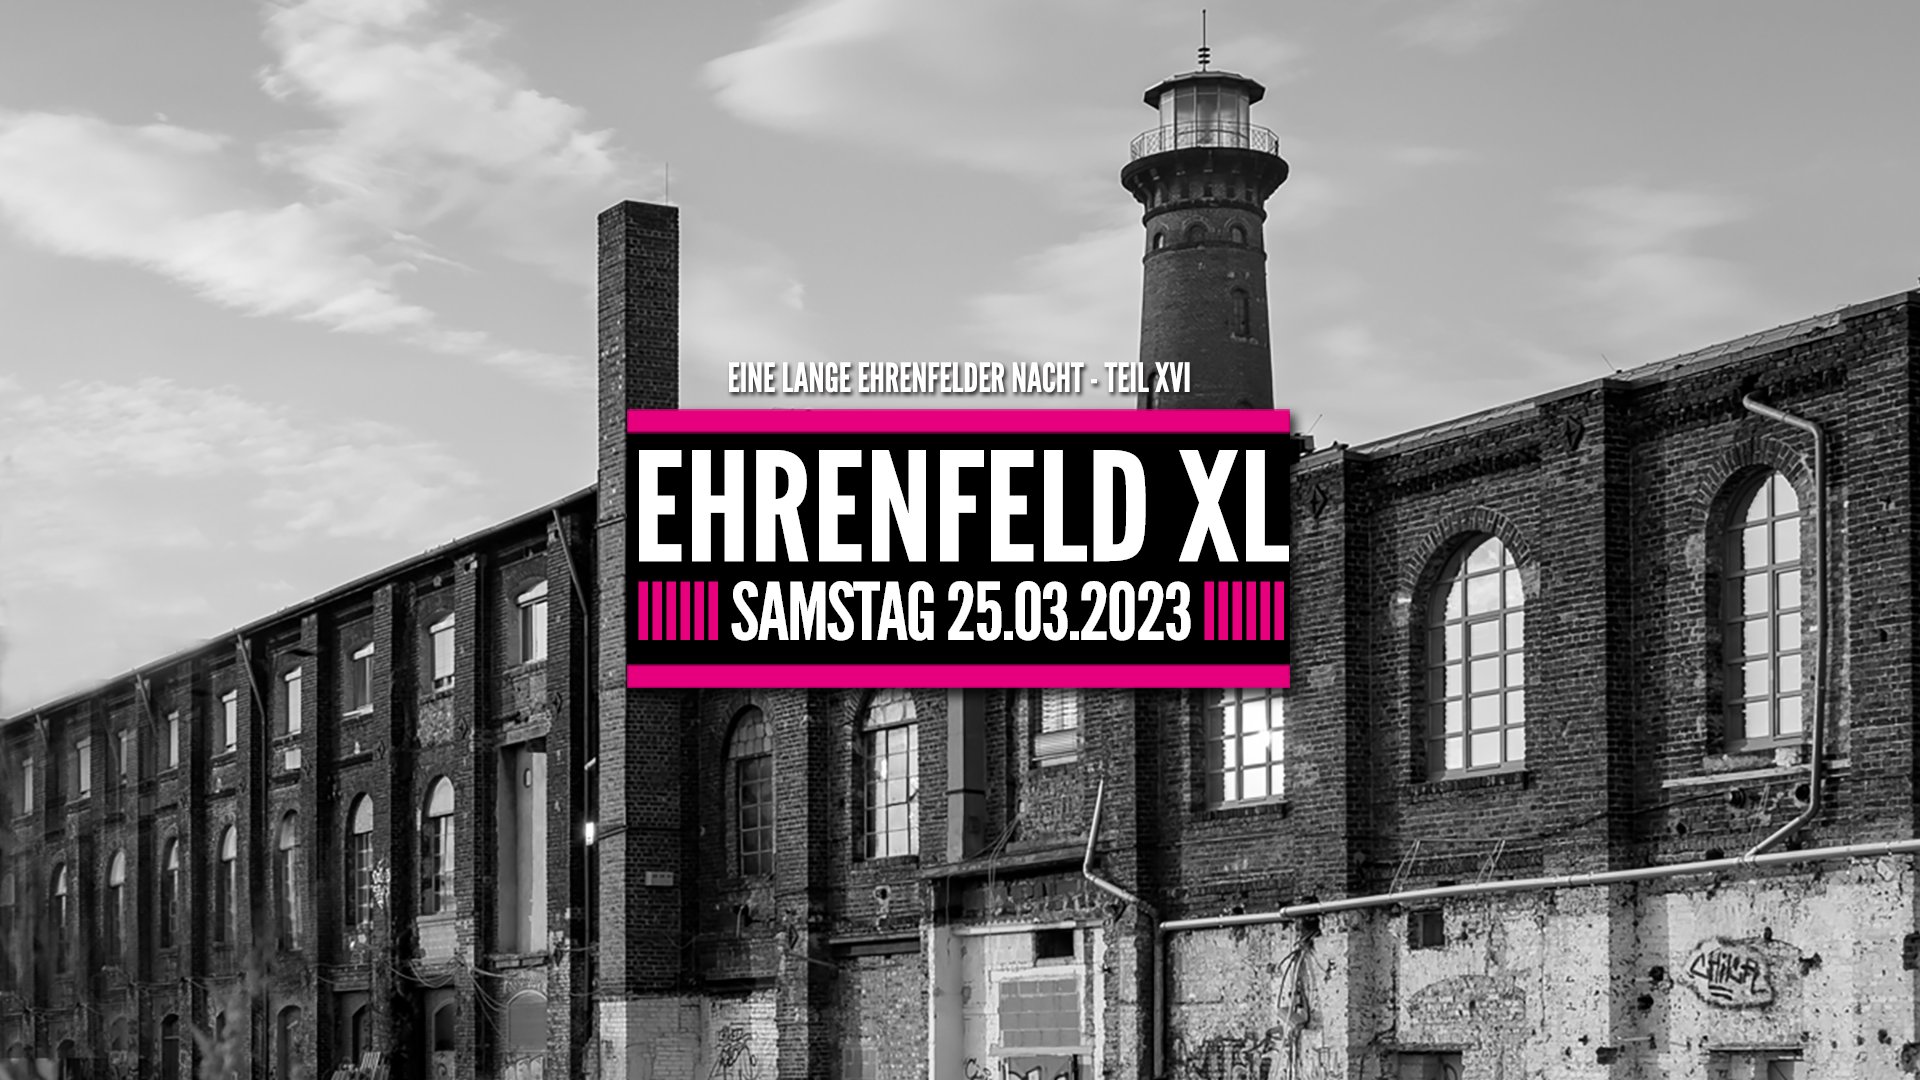 Ehrenfeld XL